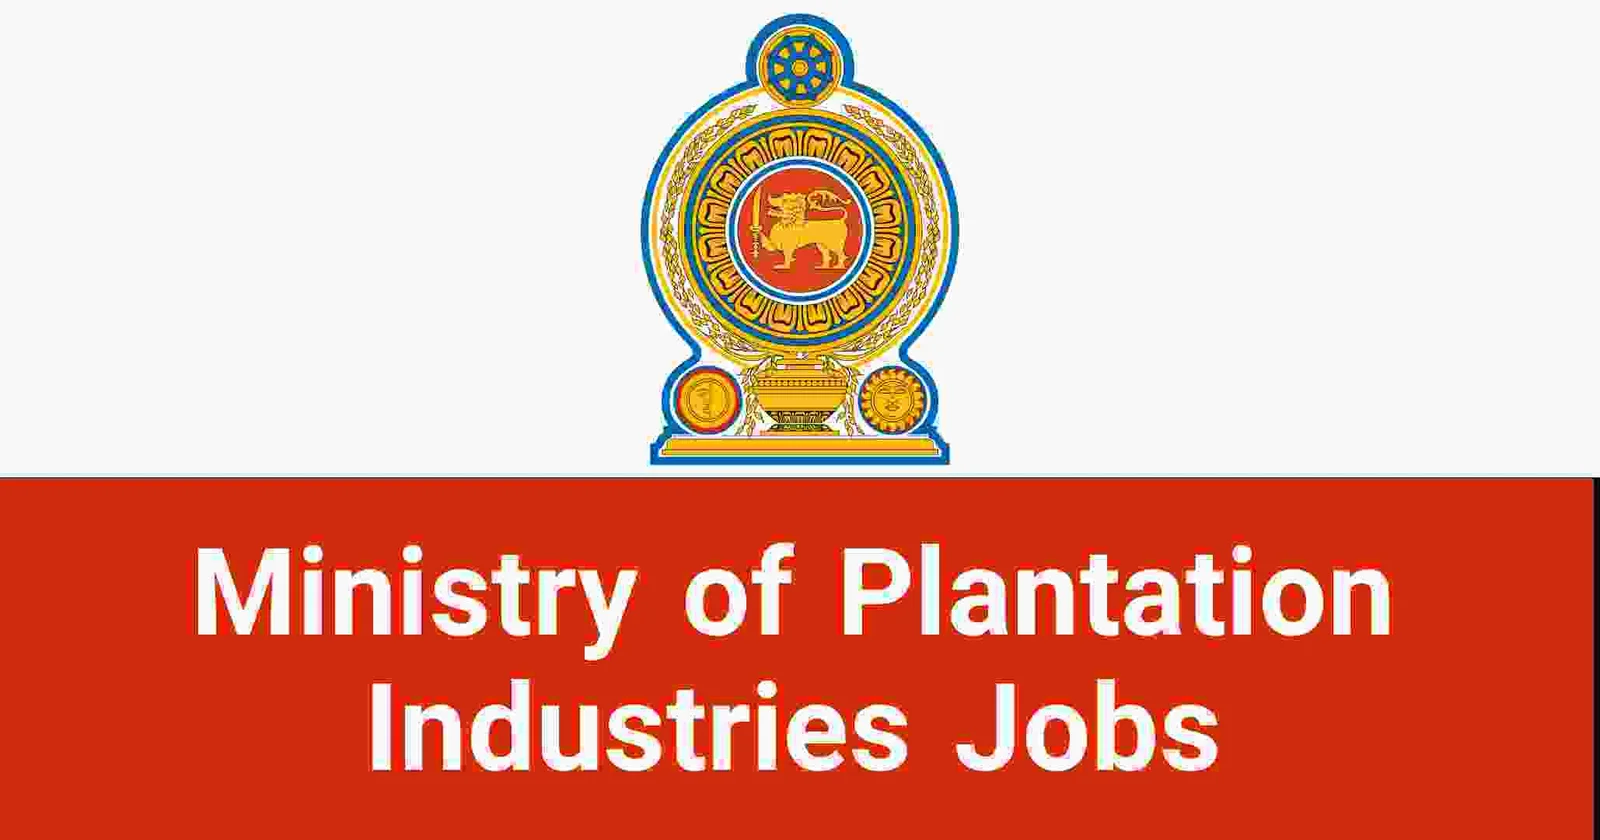 Ministry of Plantation Industries Jobs Vacancies Careers Applications